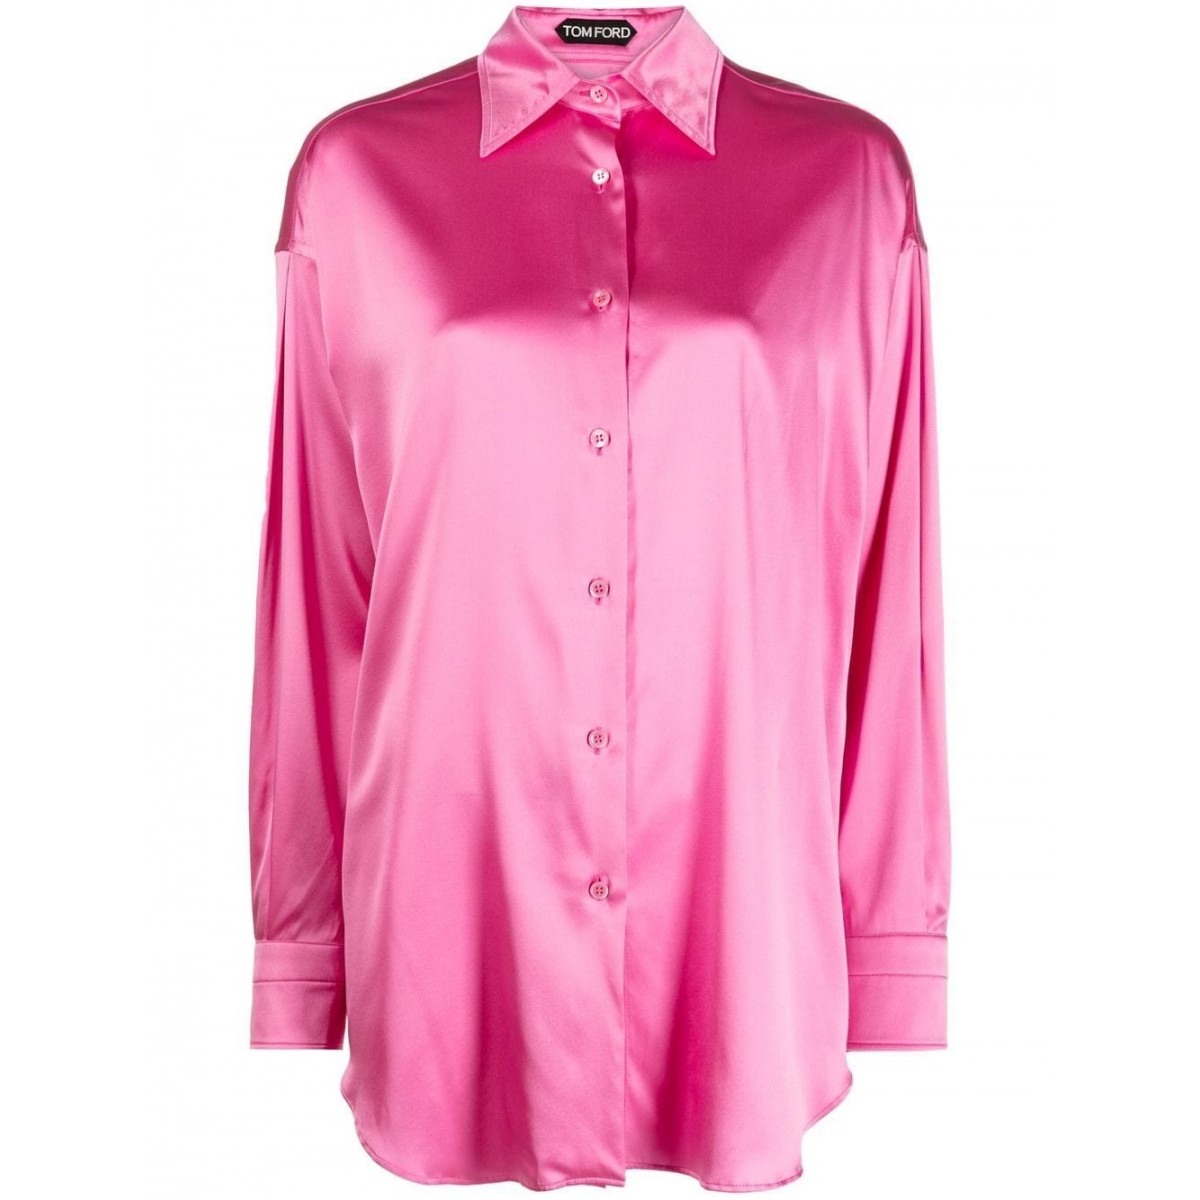 Tom Ford Rosebloom Silk Blend Pointed Collar Shirt.